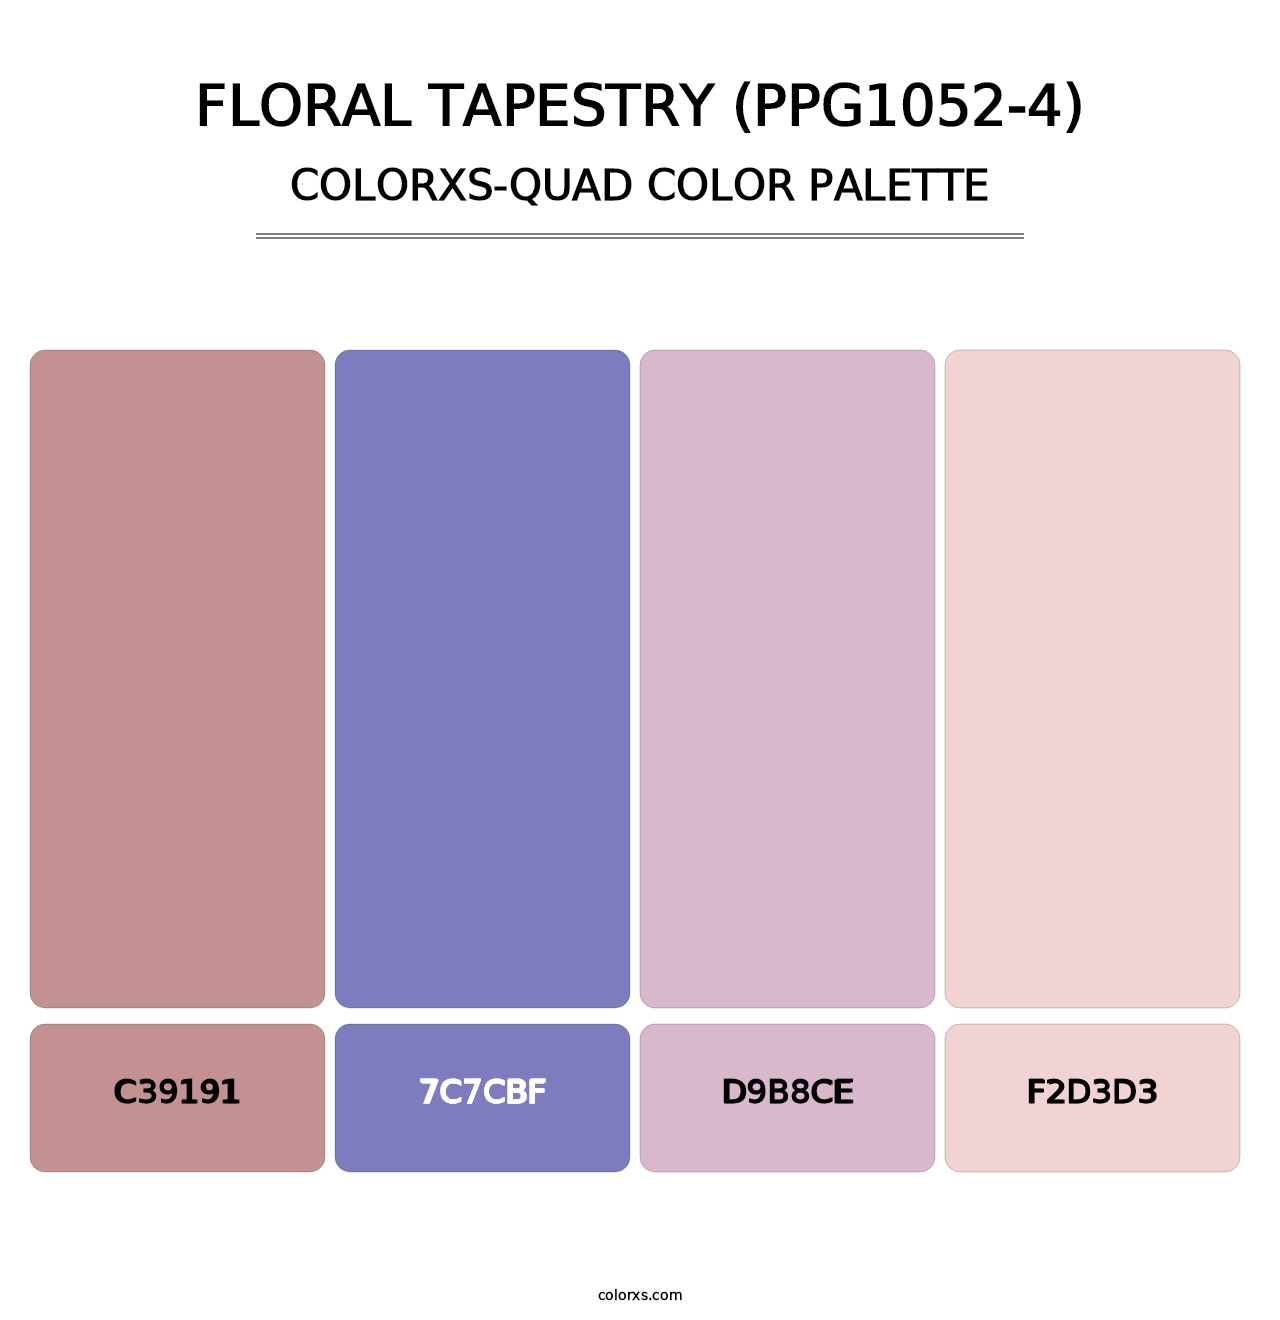 Floral Tapestry (PPG1052-4) - Colorxs Quad Palette